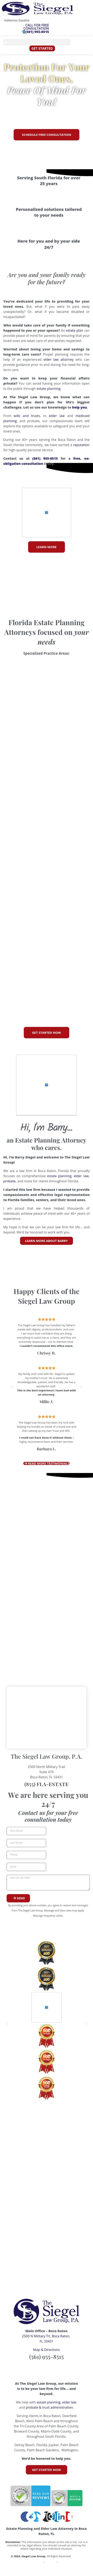 The Siegel Law Group, P.A. - Boca Raton FL Lawyers